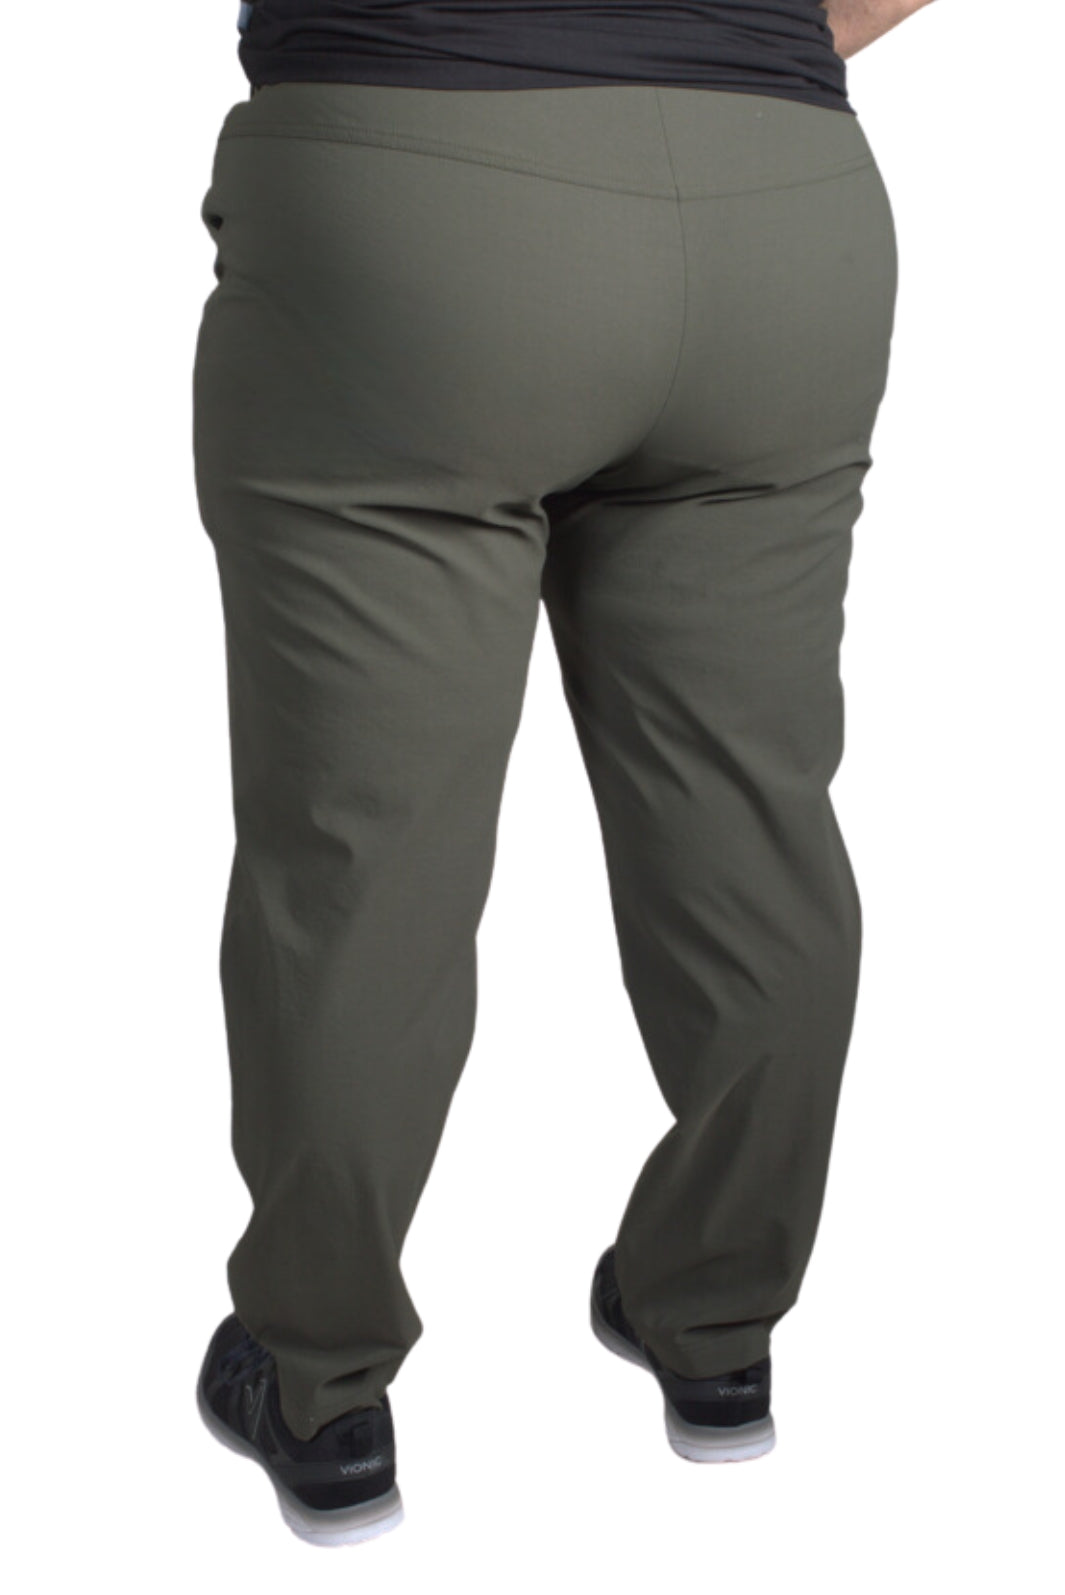 Pantalon Chesapeake Taille Plus de Sportive Plus